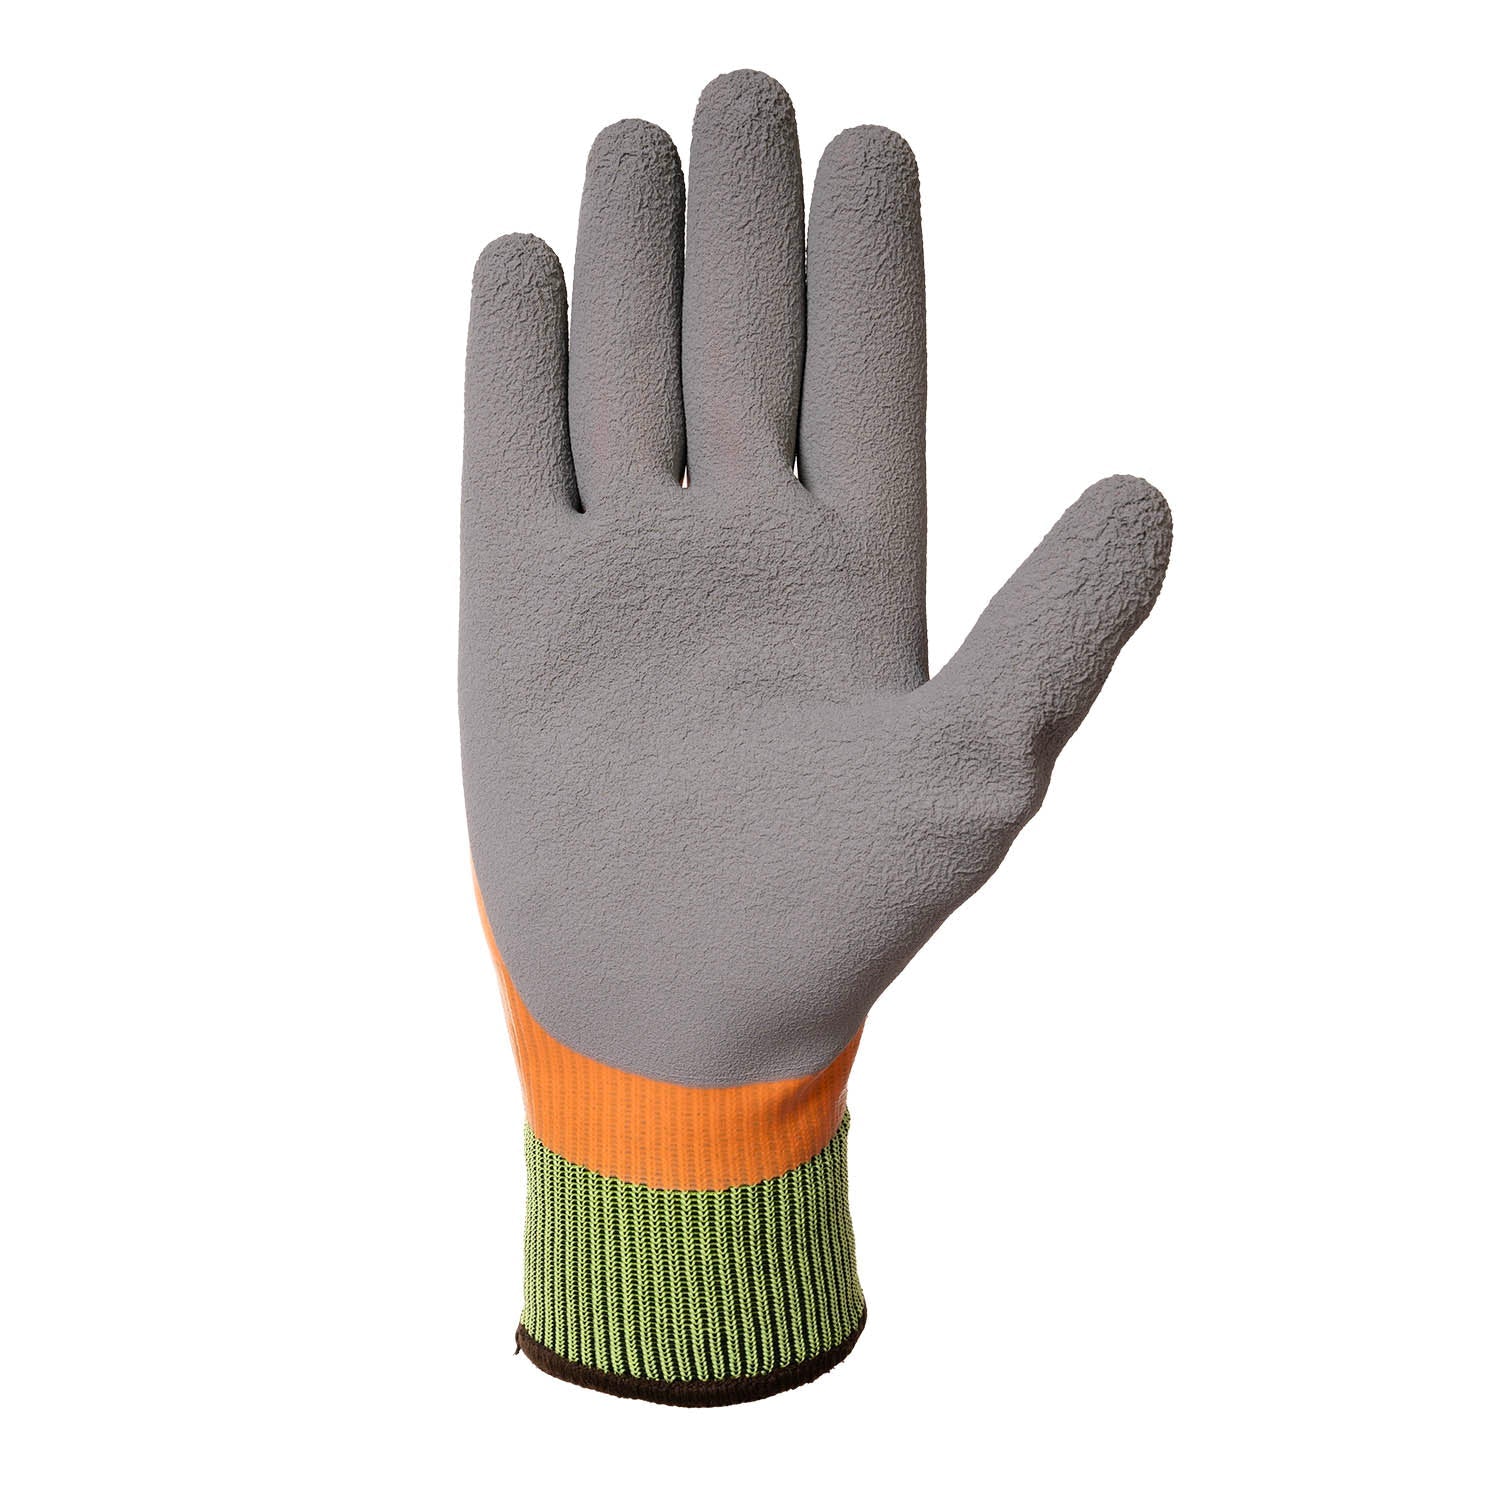 "Samurai Nemesis" Fully CoatedInsulated Latex Durable Work Glove